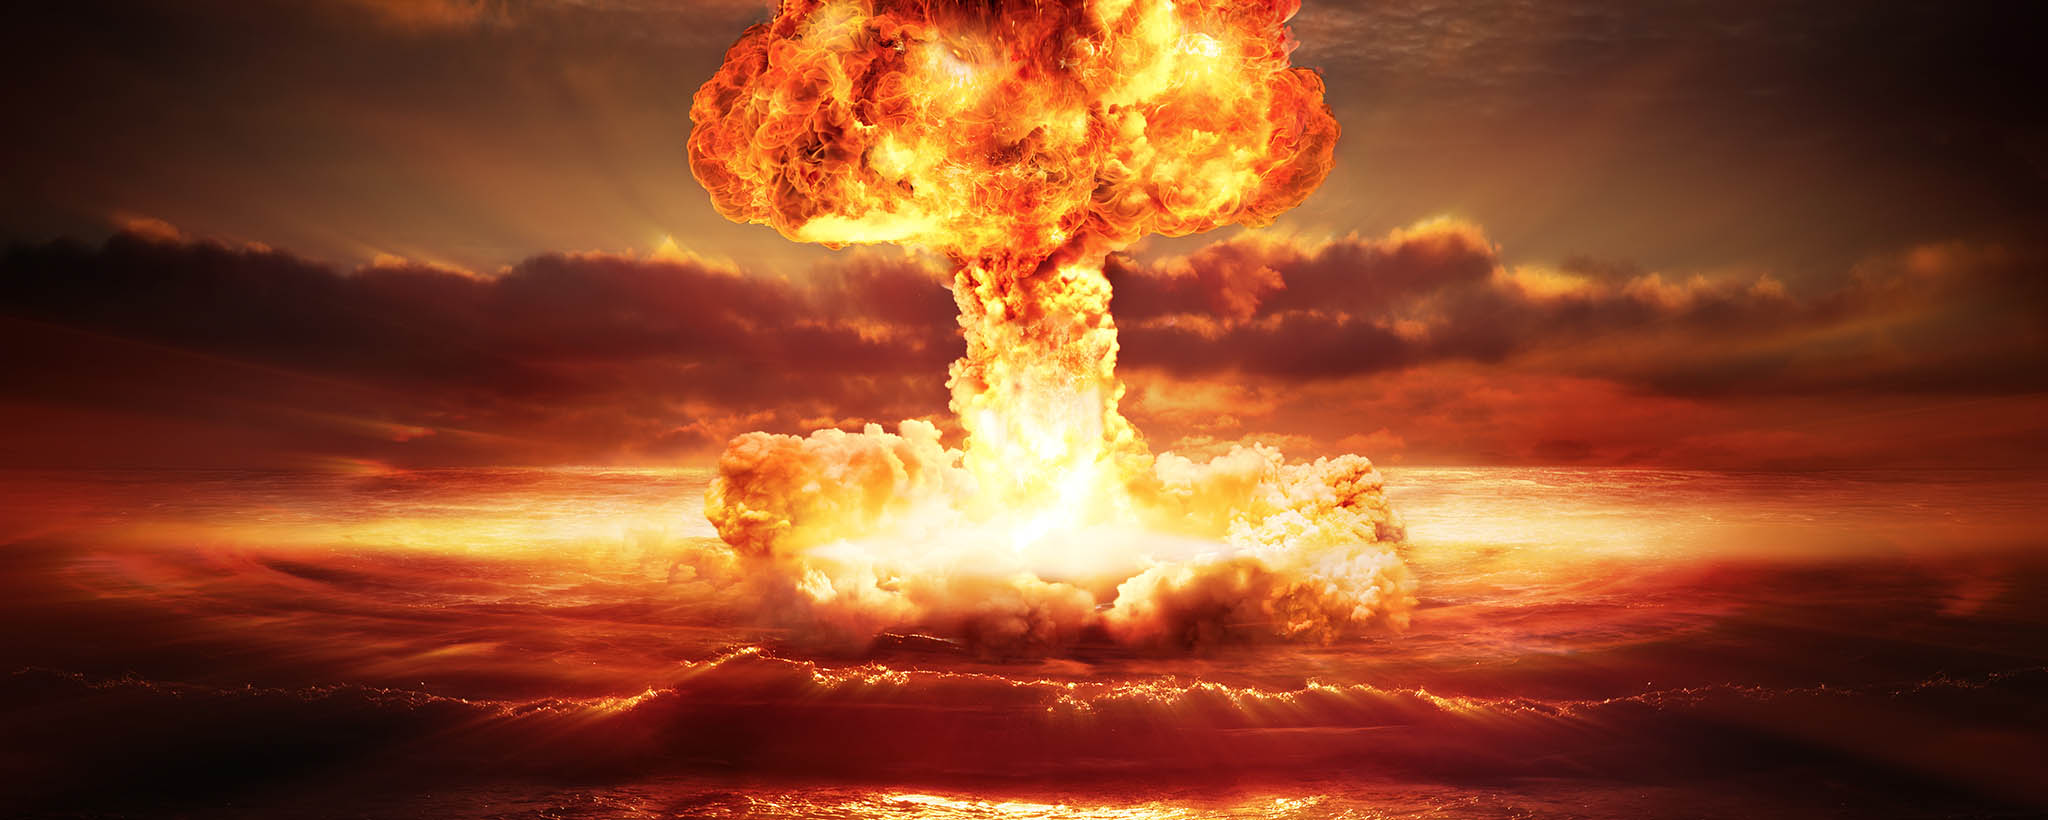 Nuclear Explosion | Ready.gov